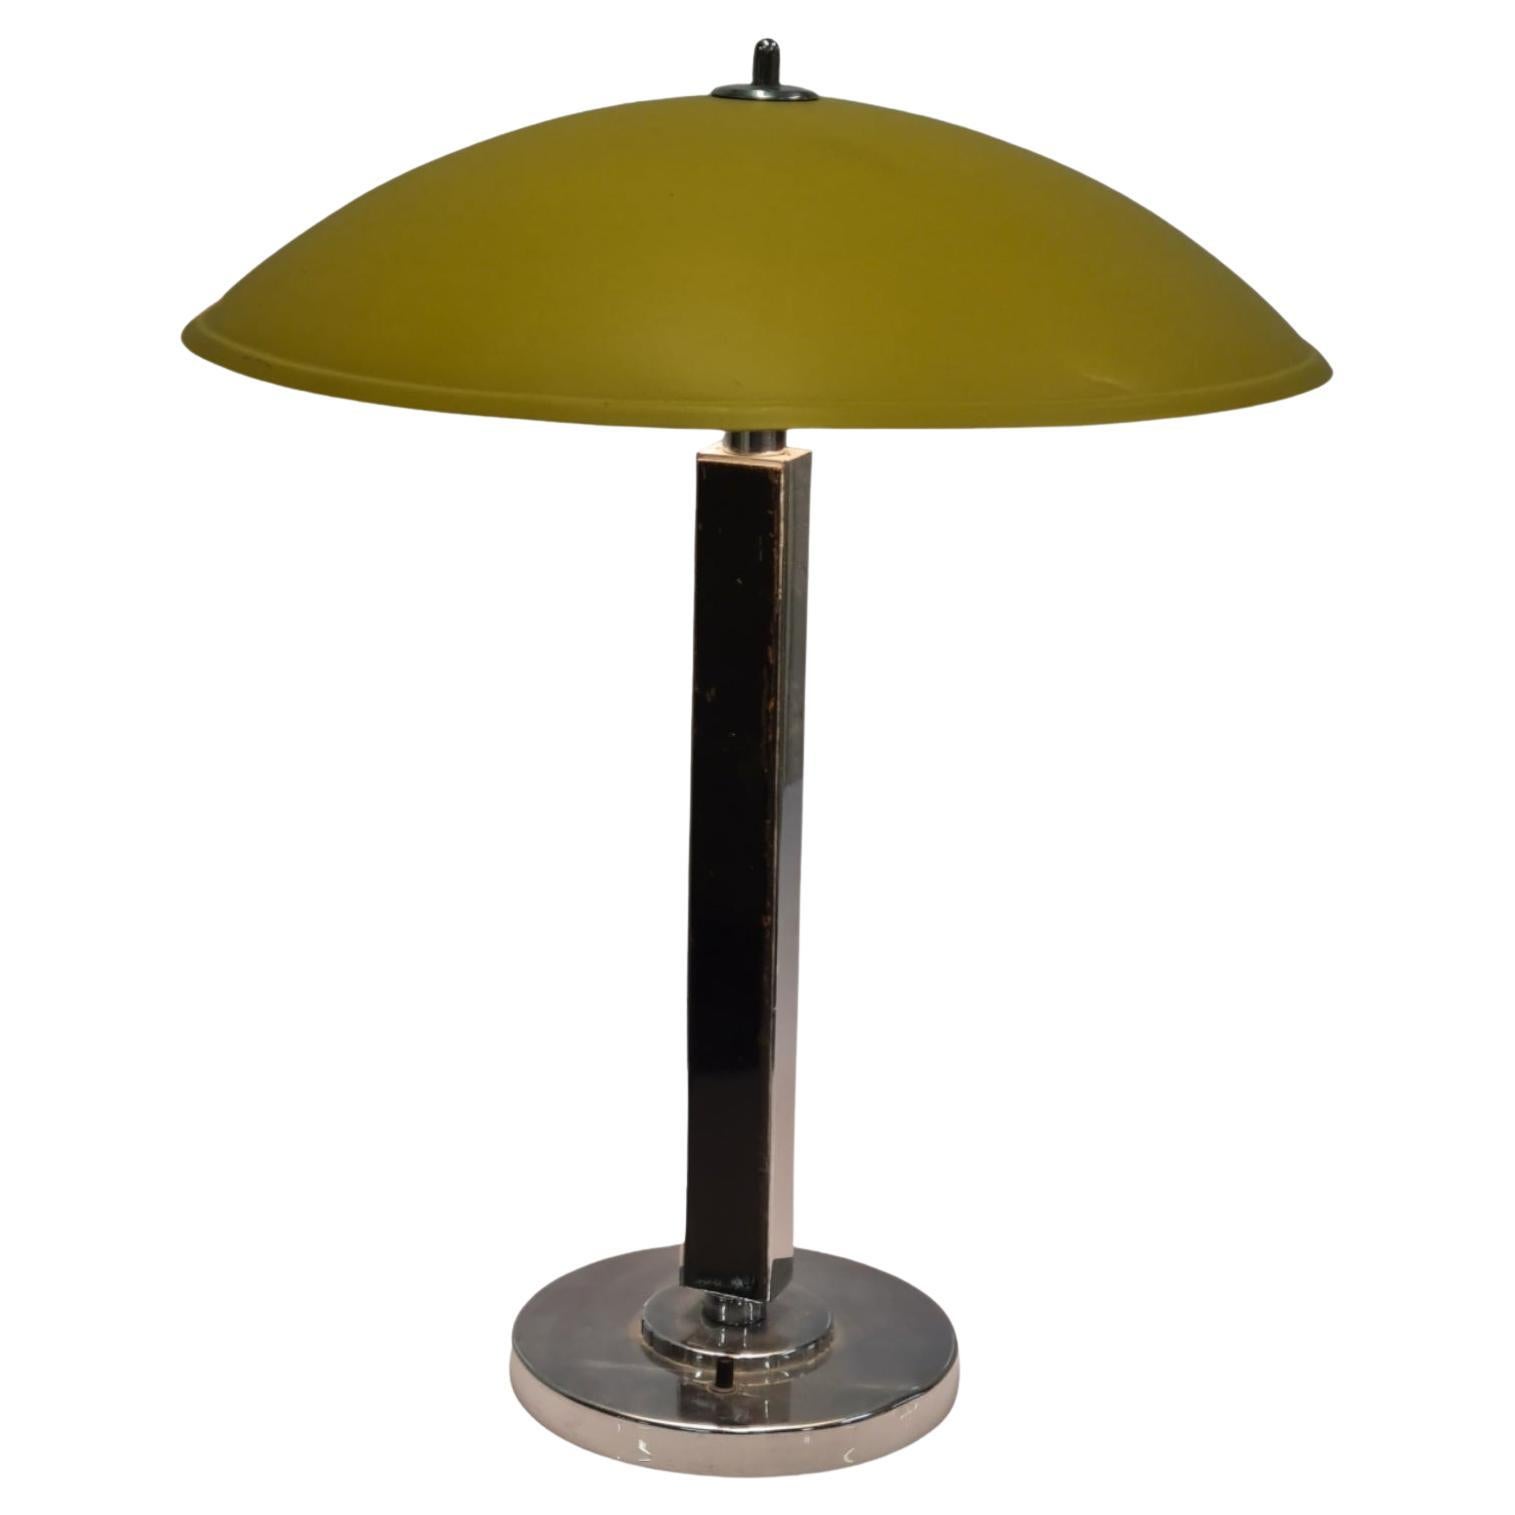 Exceedingly Rare Gunilla Jung Table Lamp Model 2004 for Orno For Sale